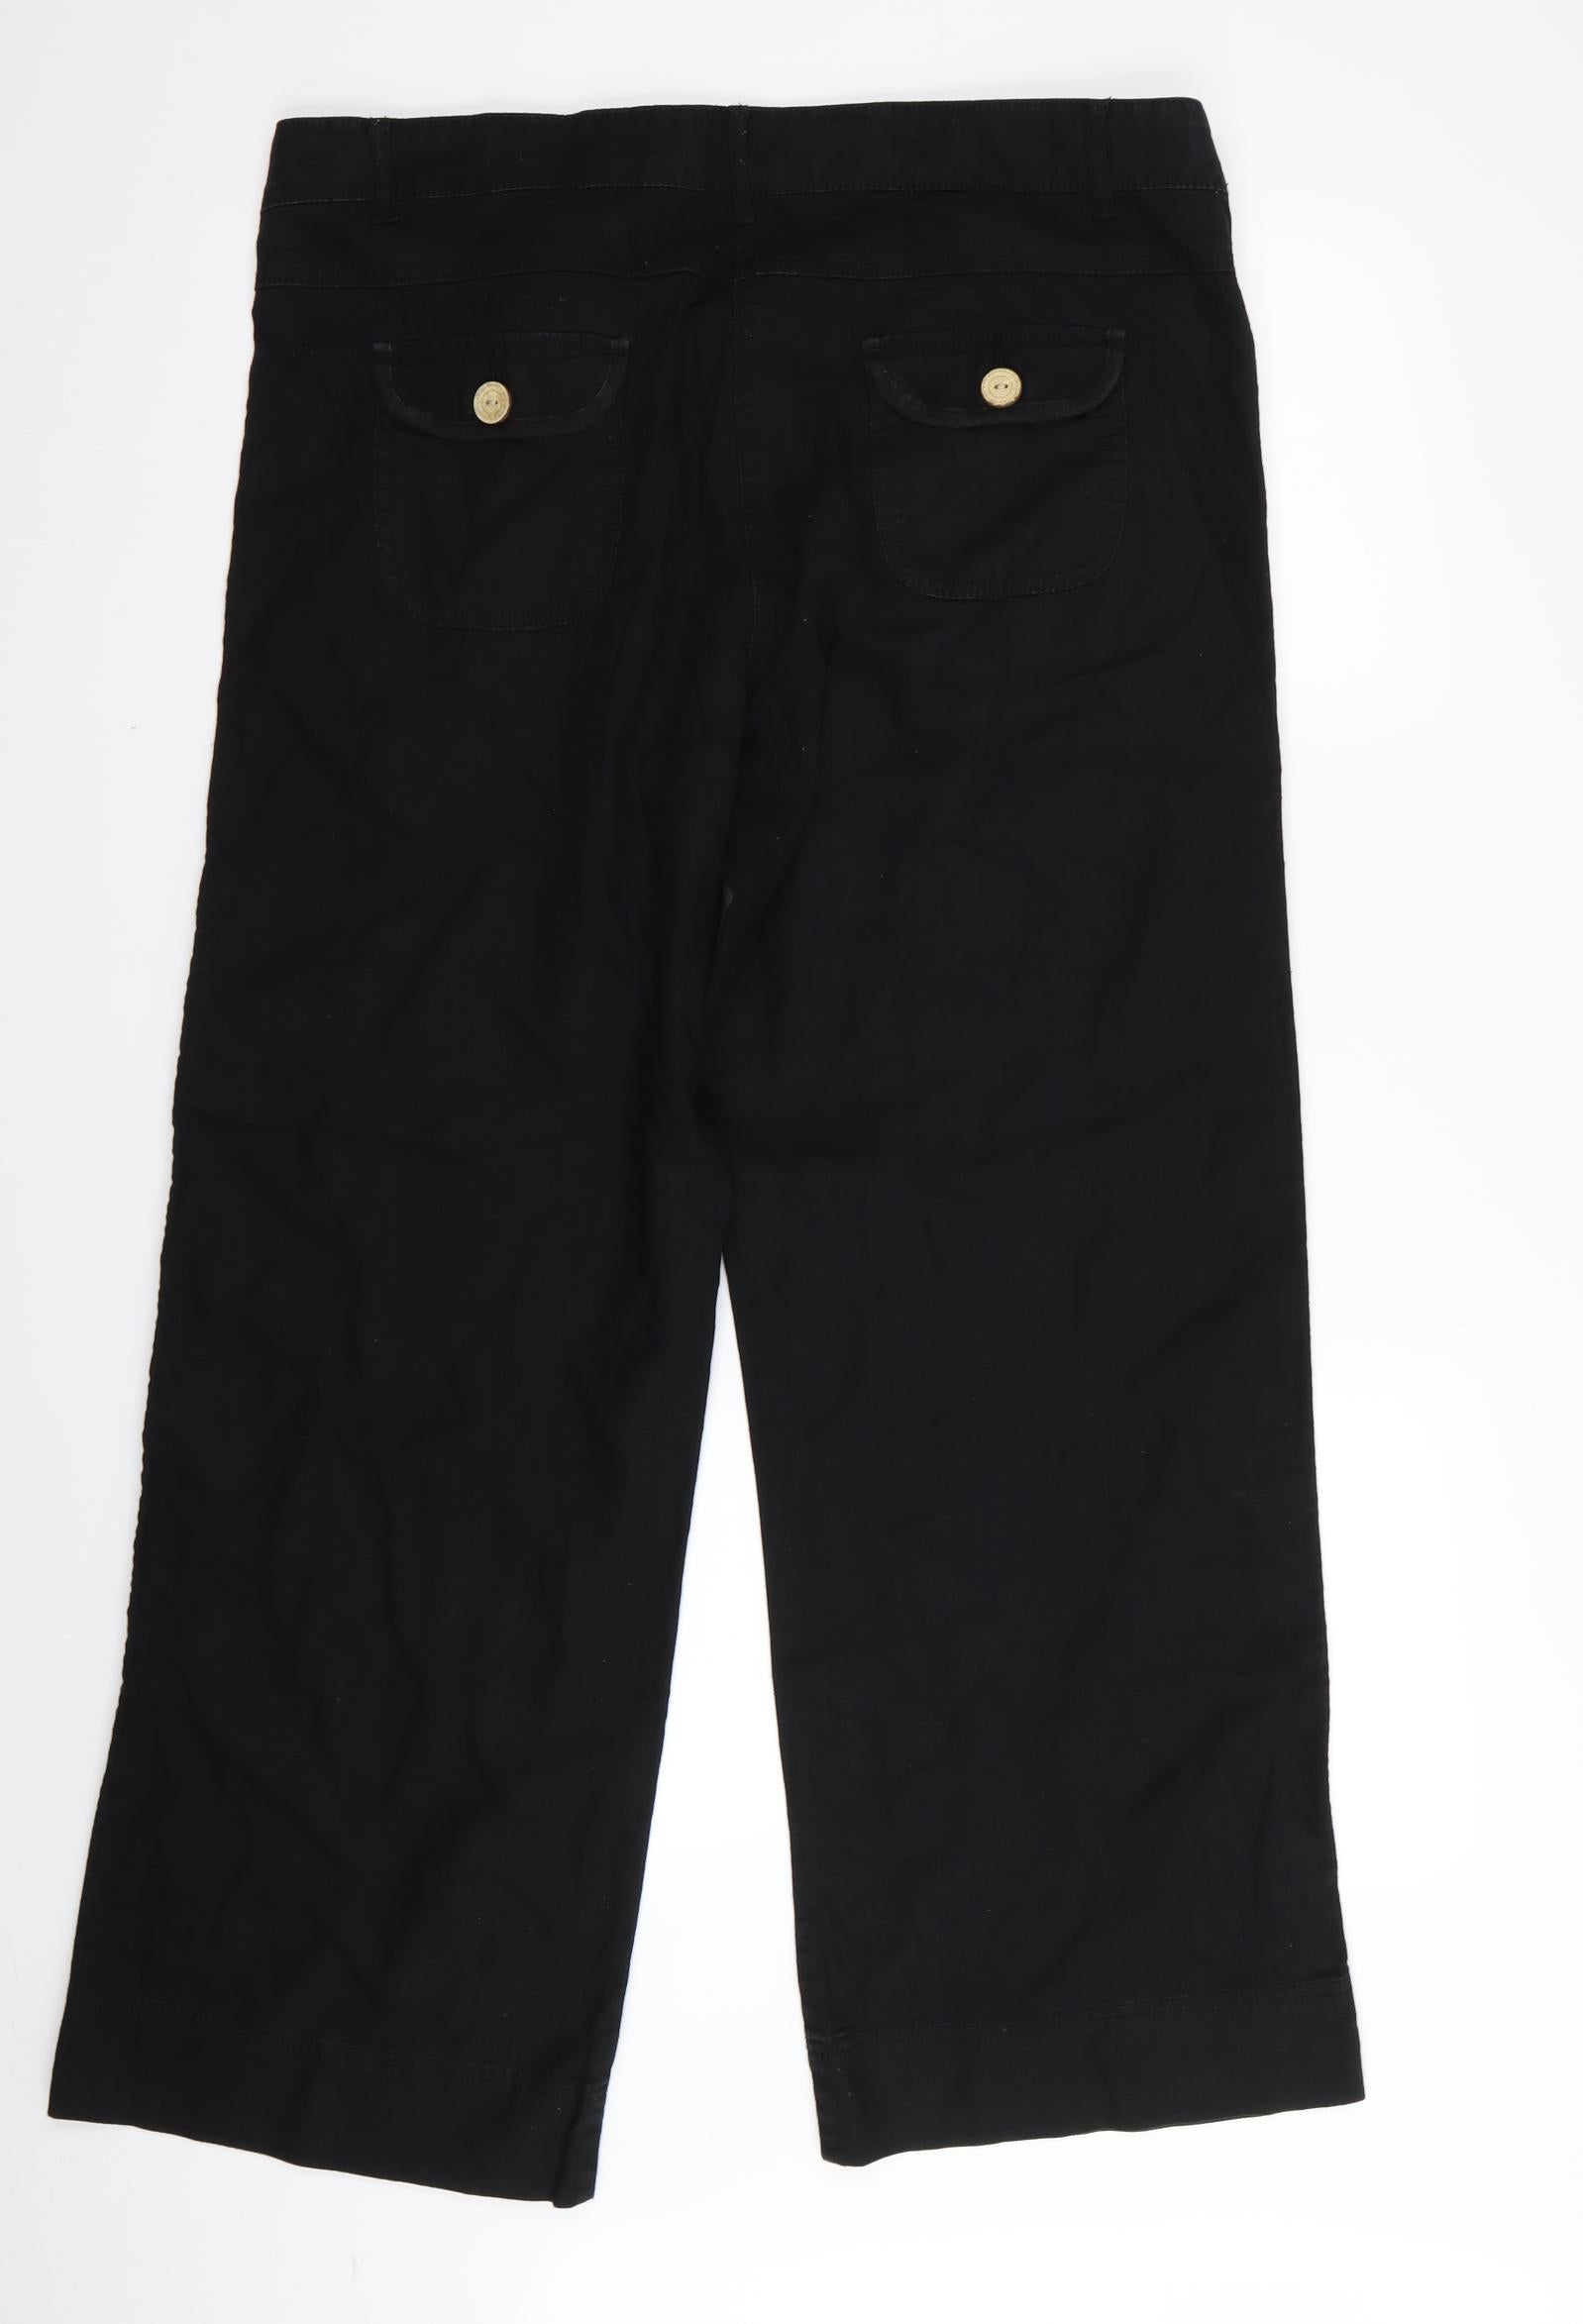 Black Pinstripe Trousers | Women | George at ASDA